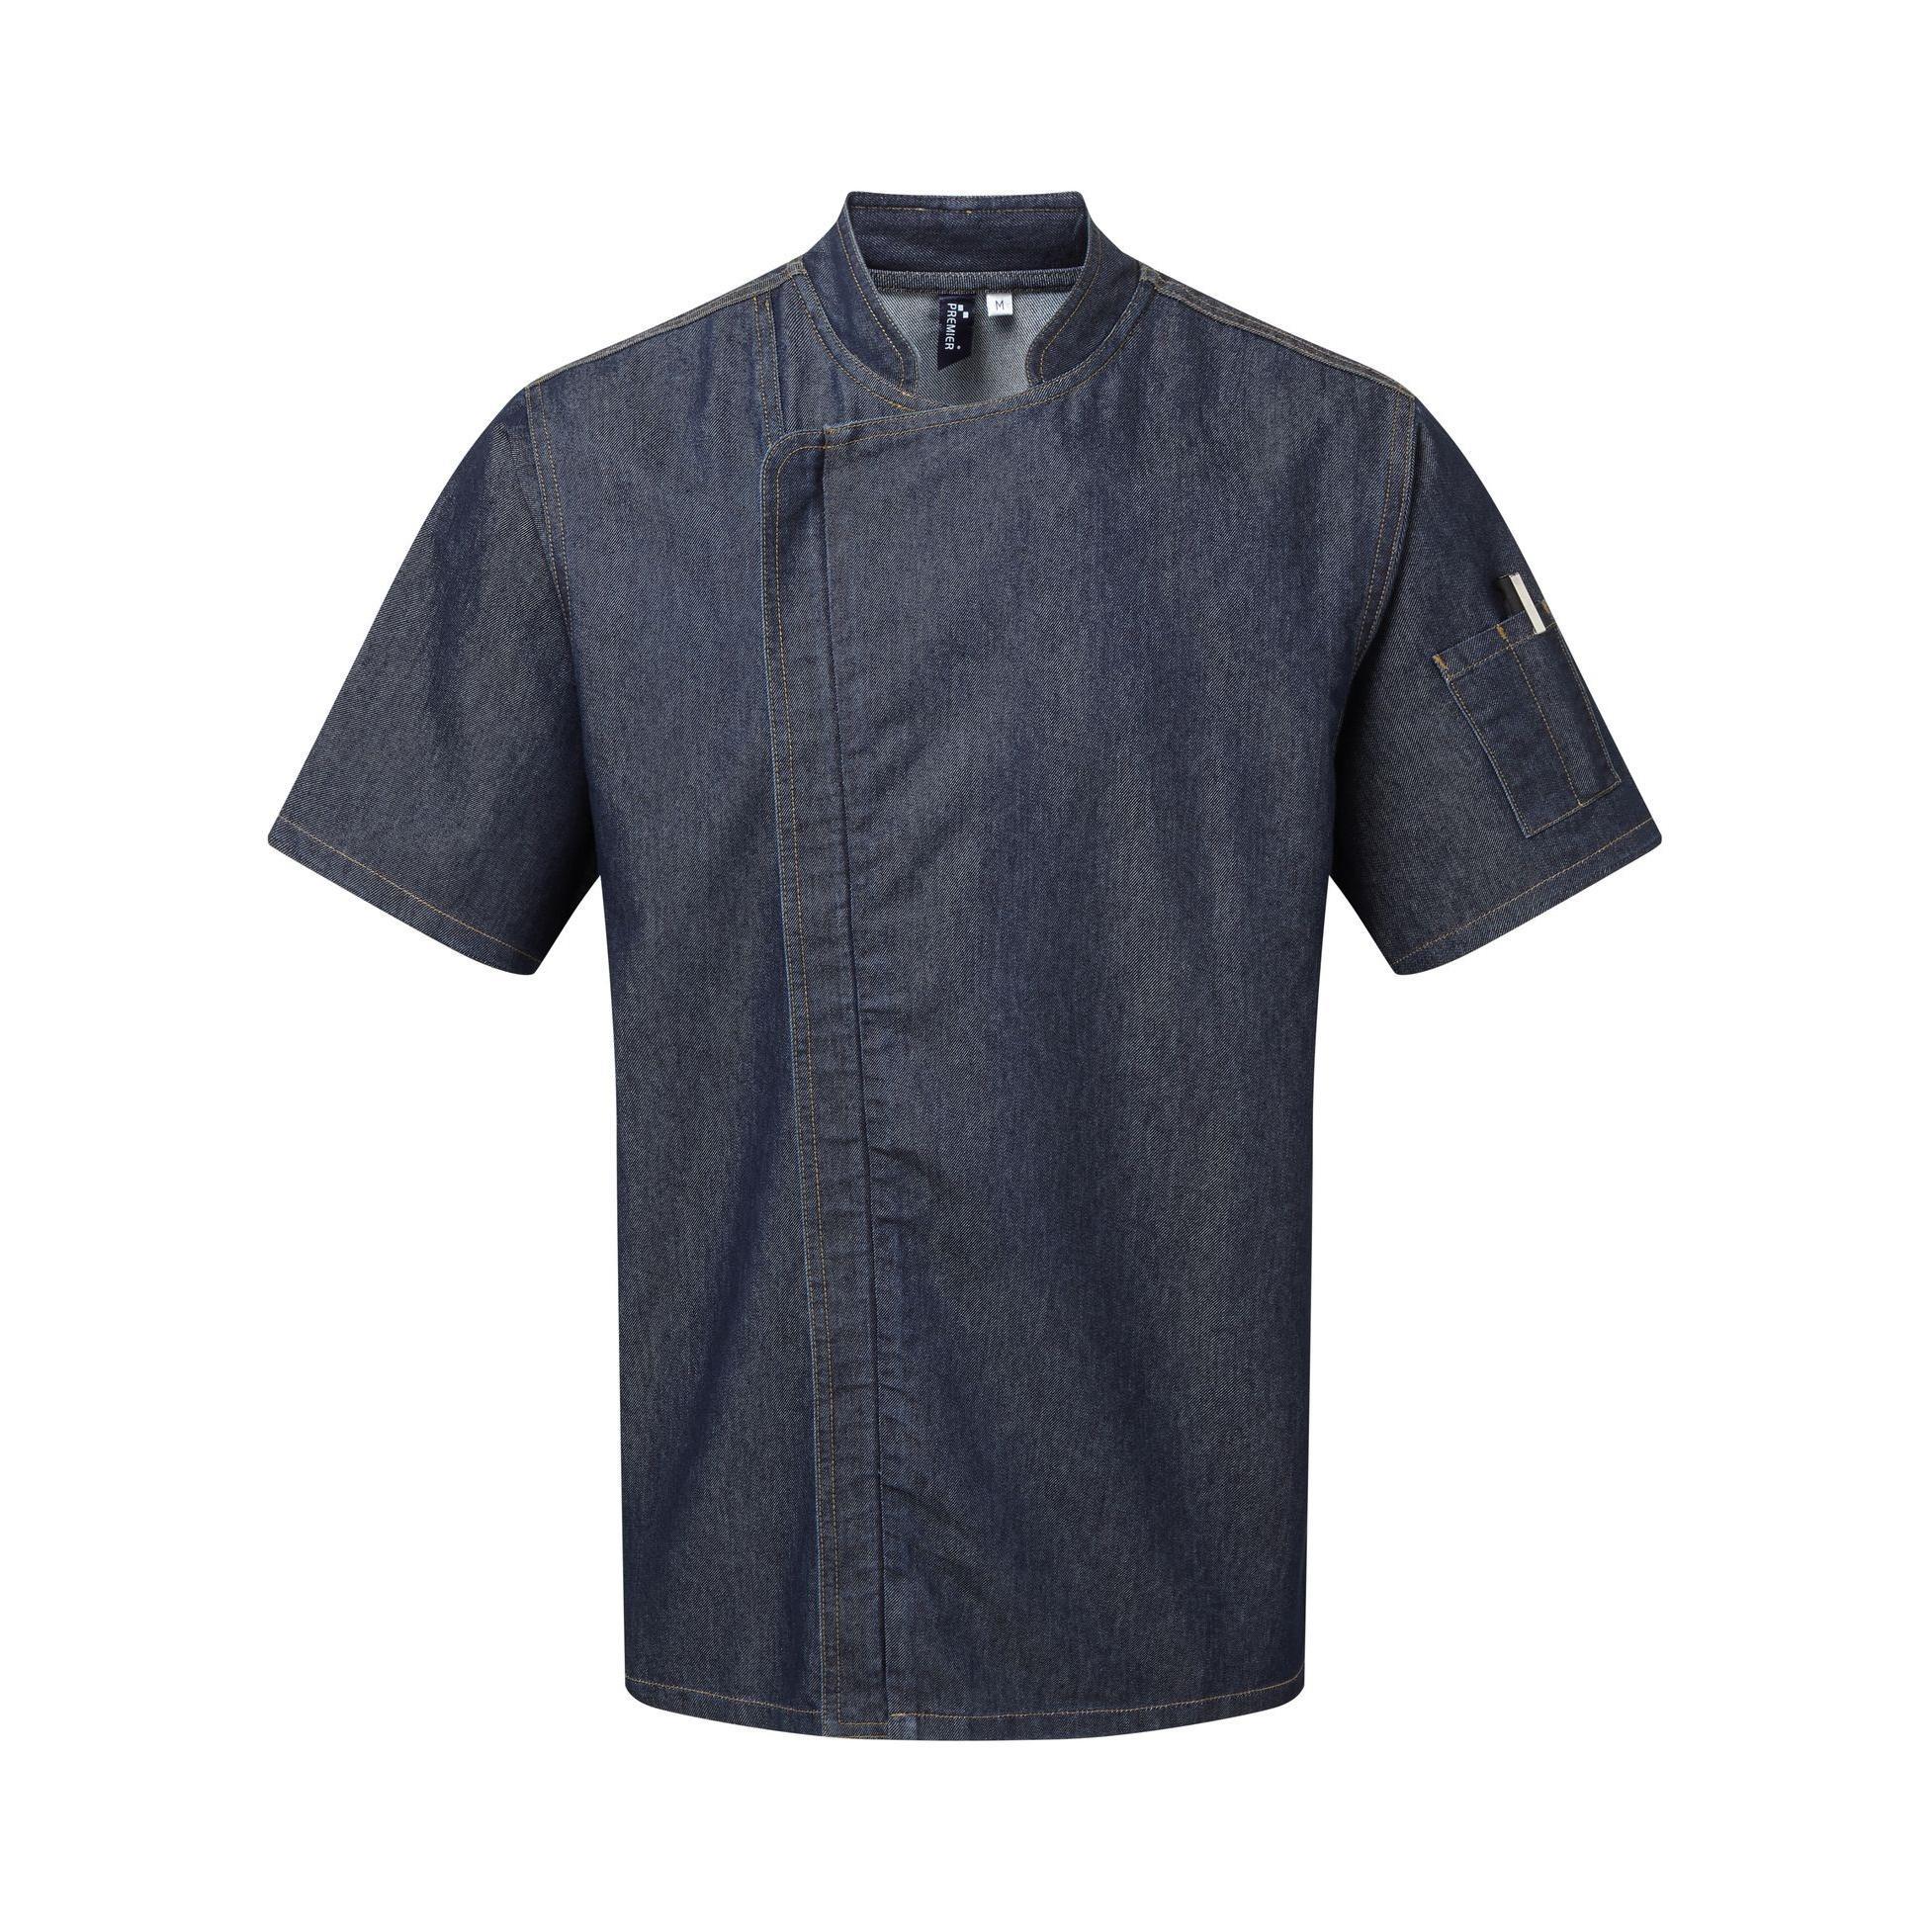 Premier Unisex Adults Chefs Zip-Close Short Sleeve Jacket (Indigo Denim) (S)